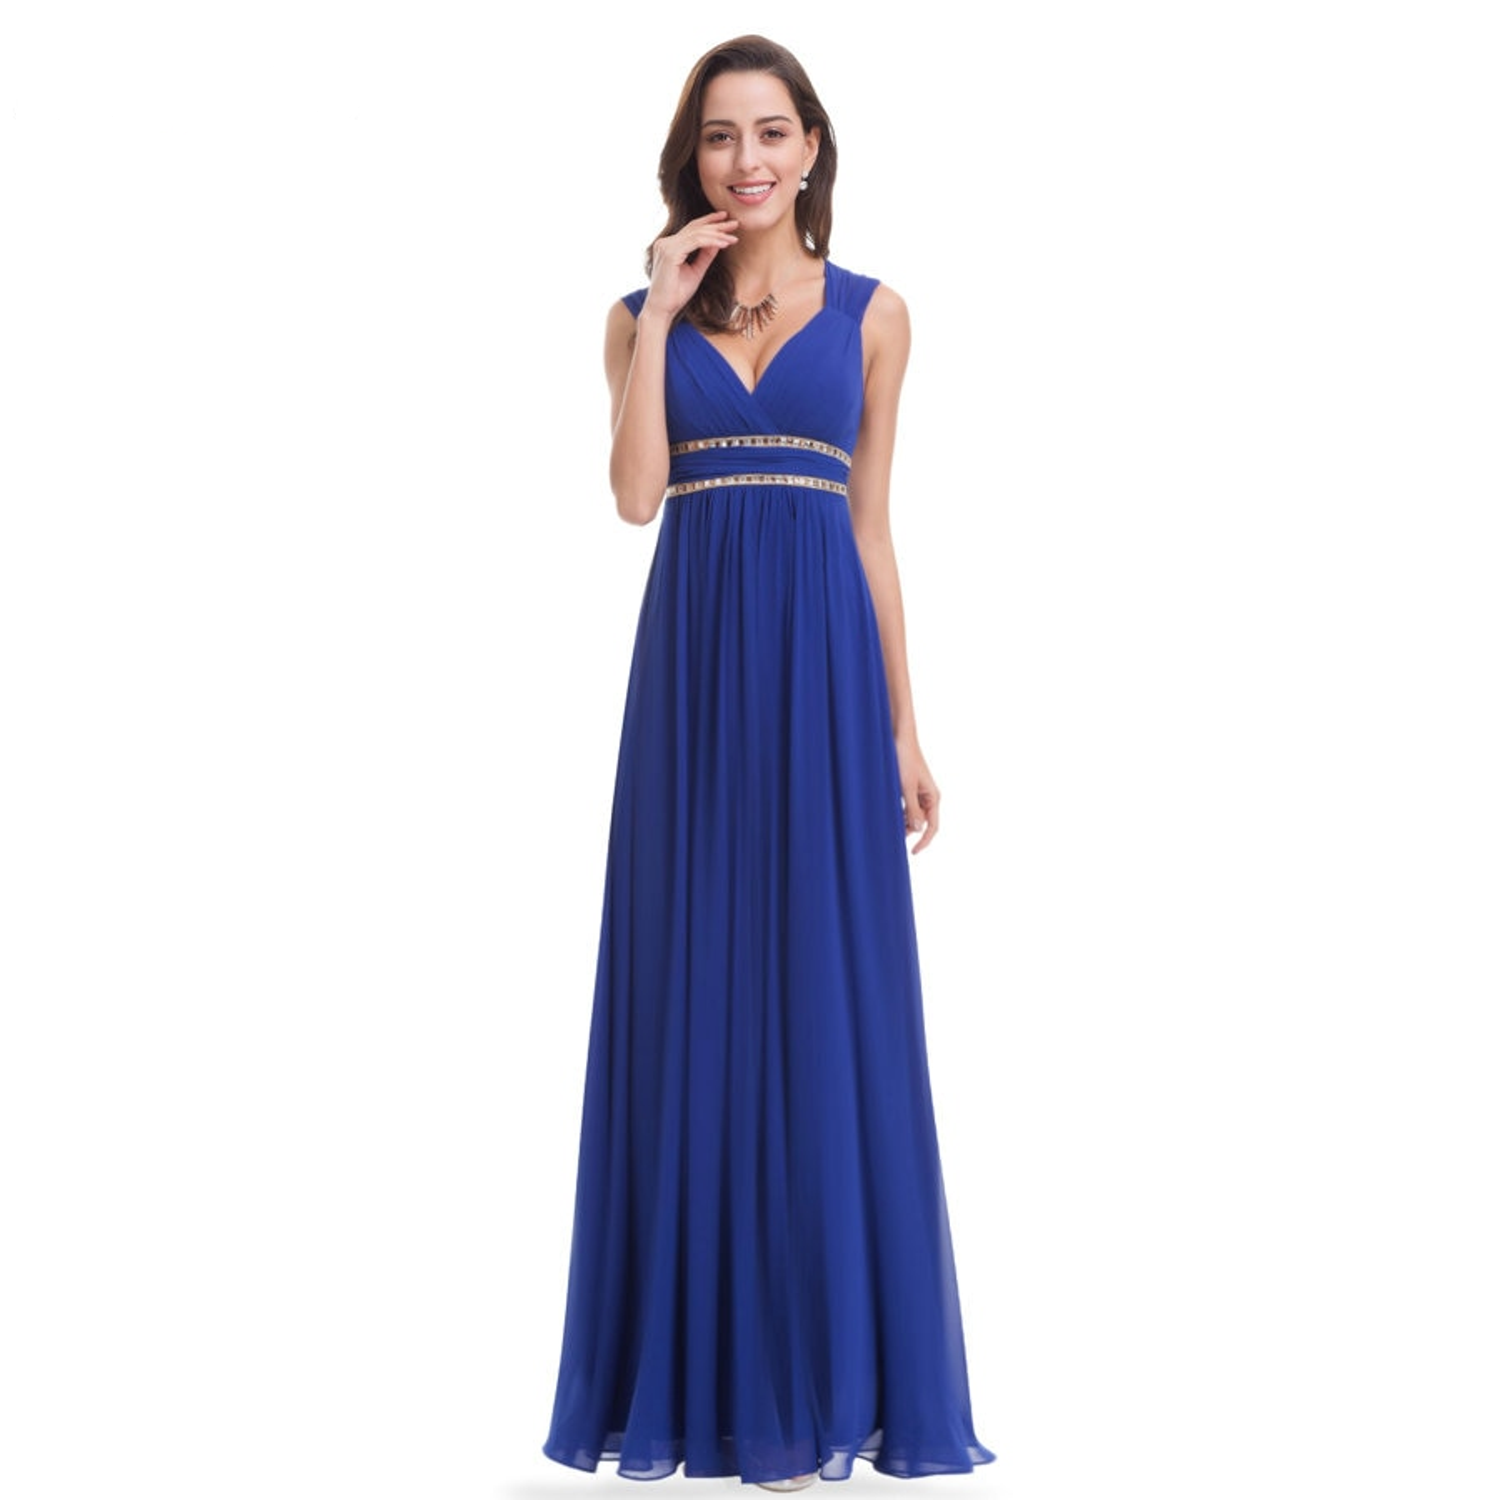 Simple blue prom dress